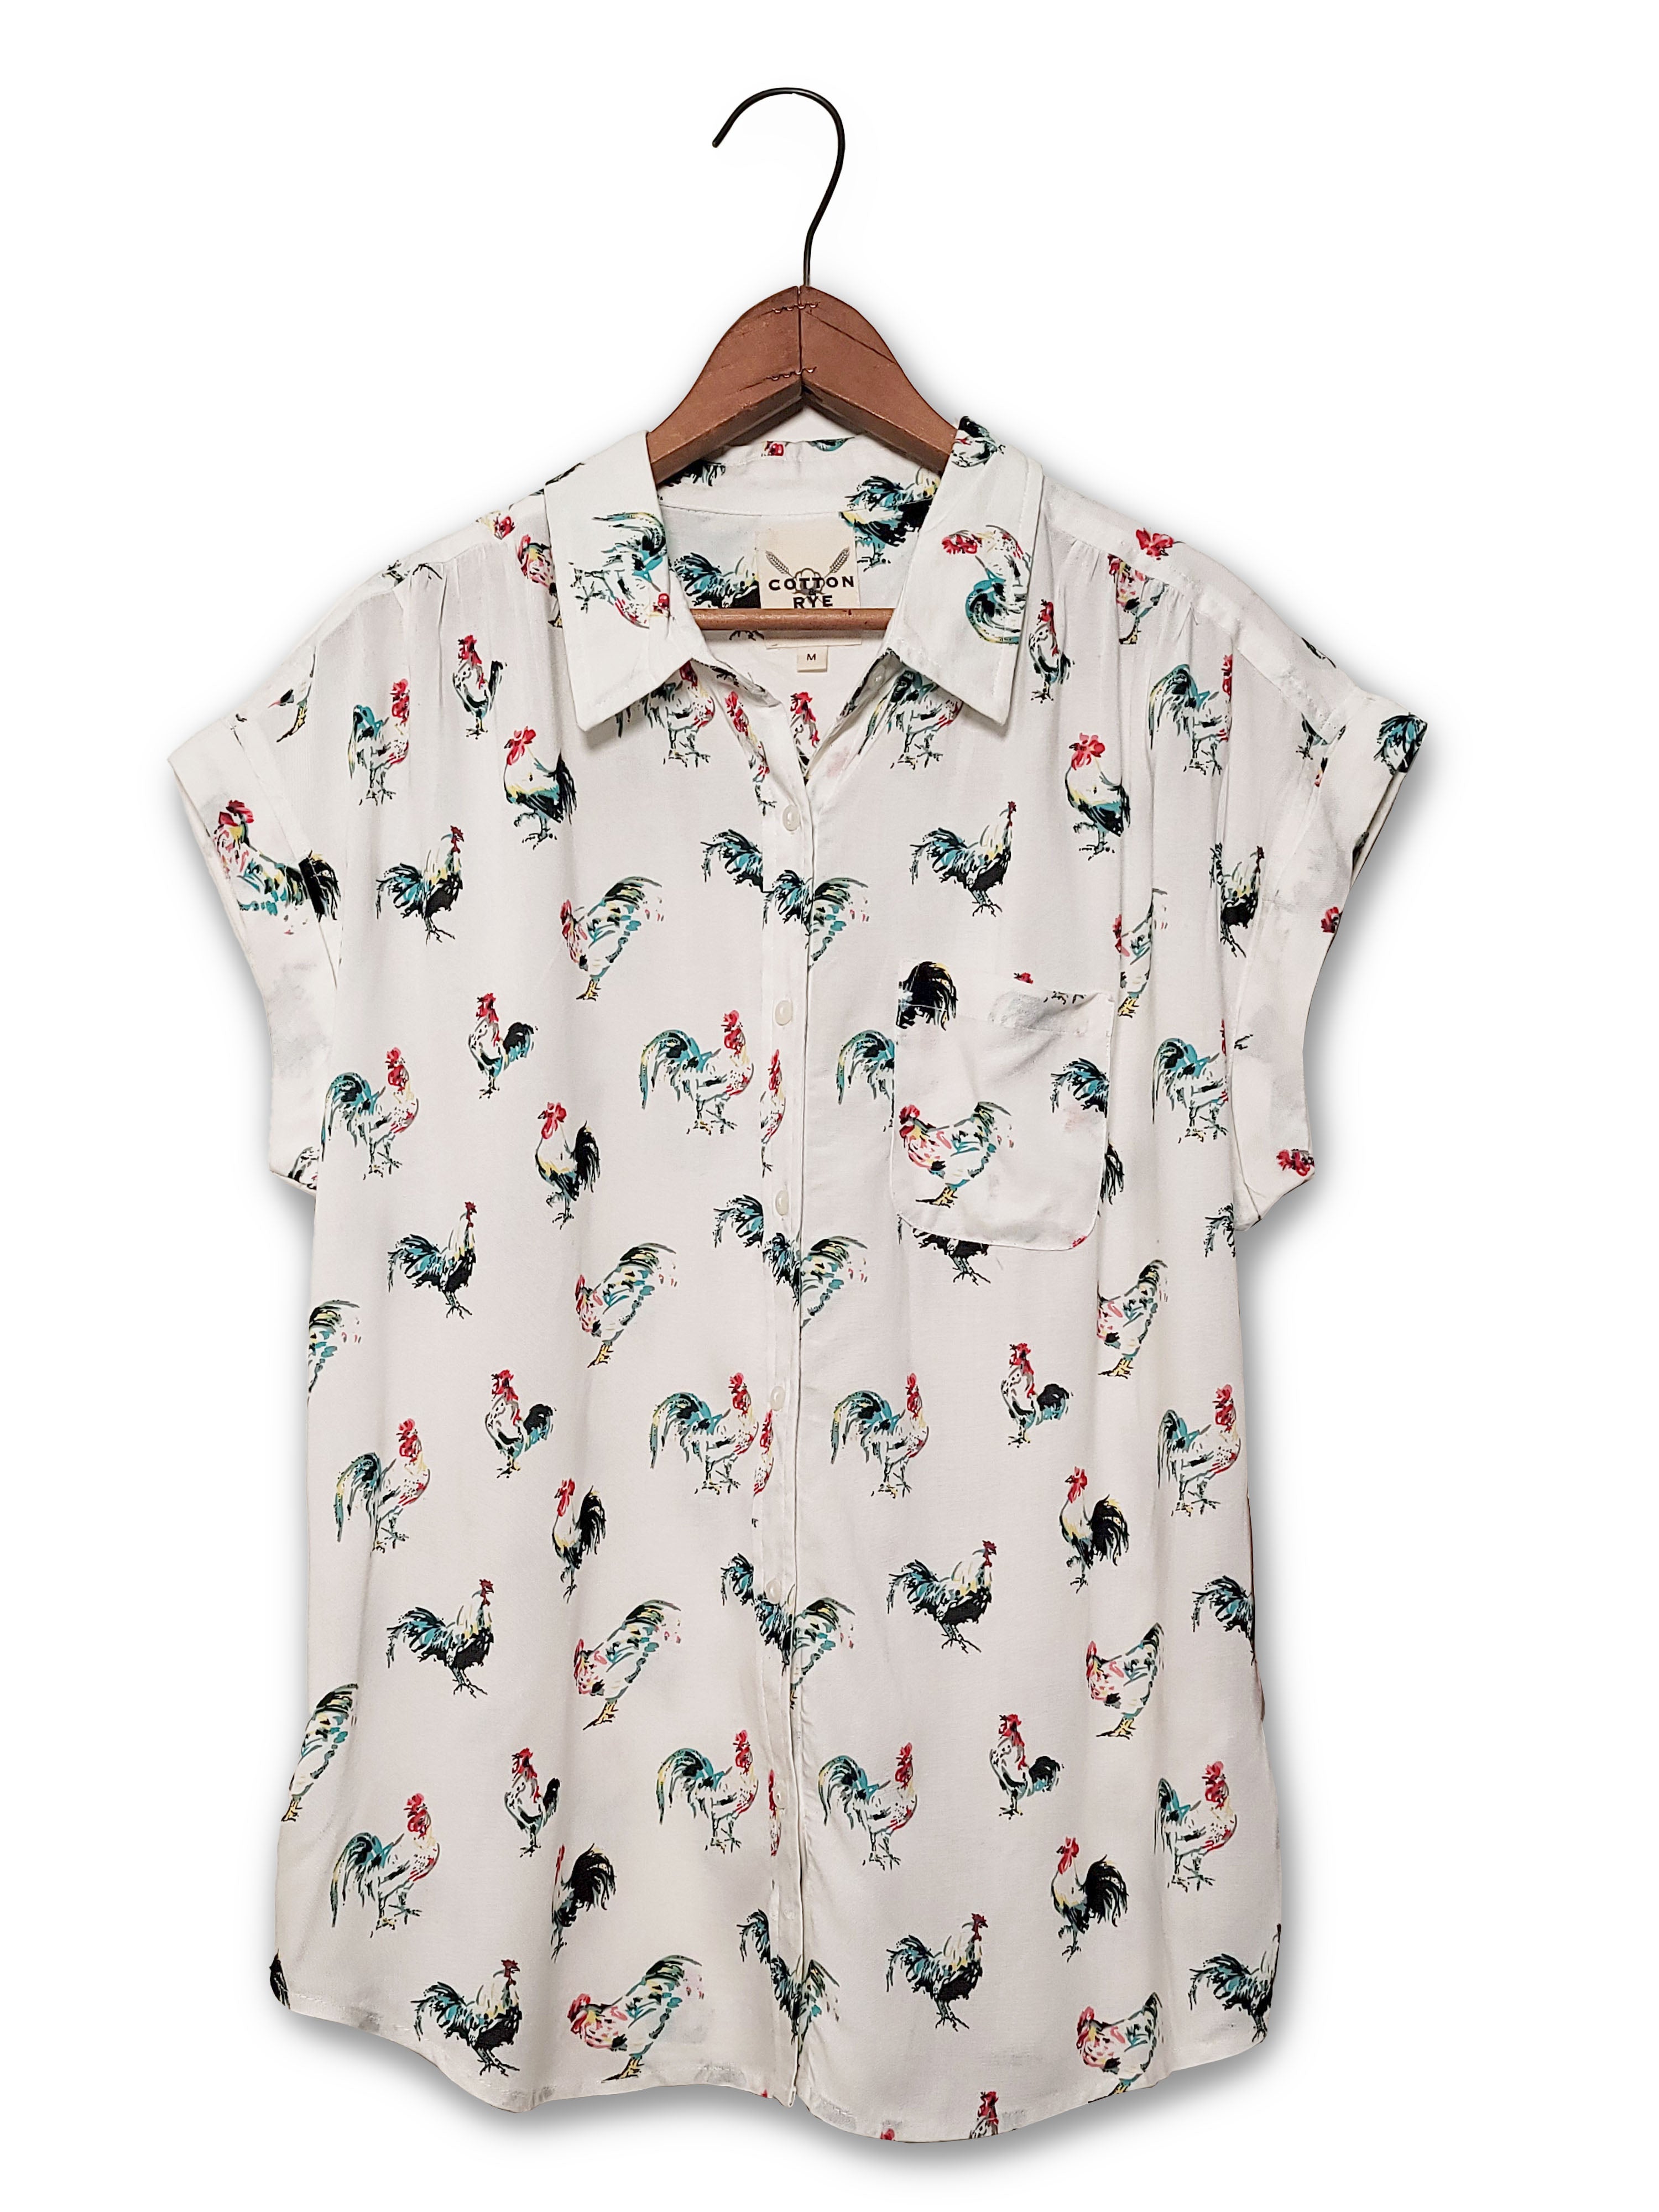 Little Rooster button up shirt